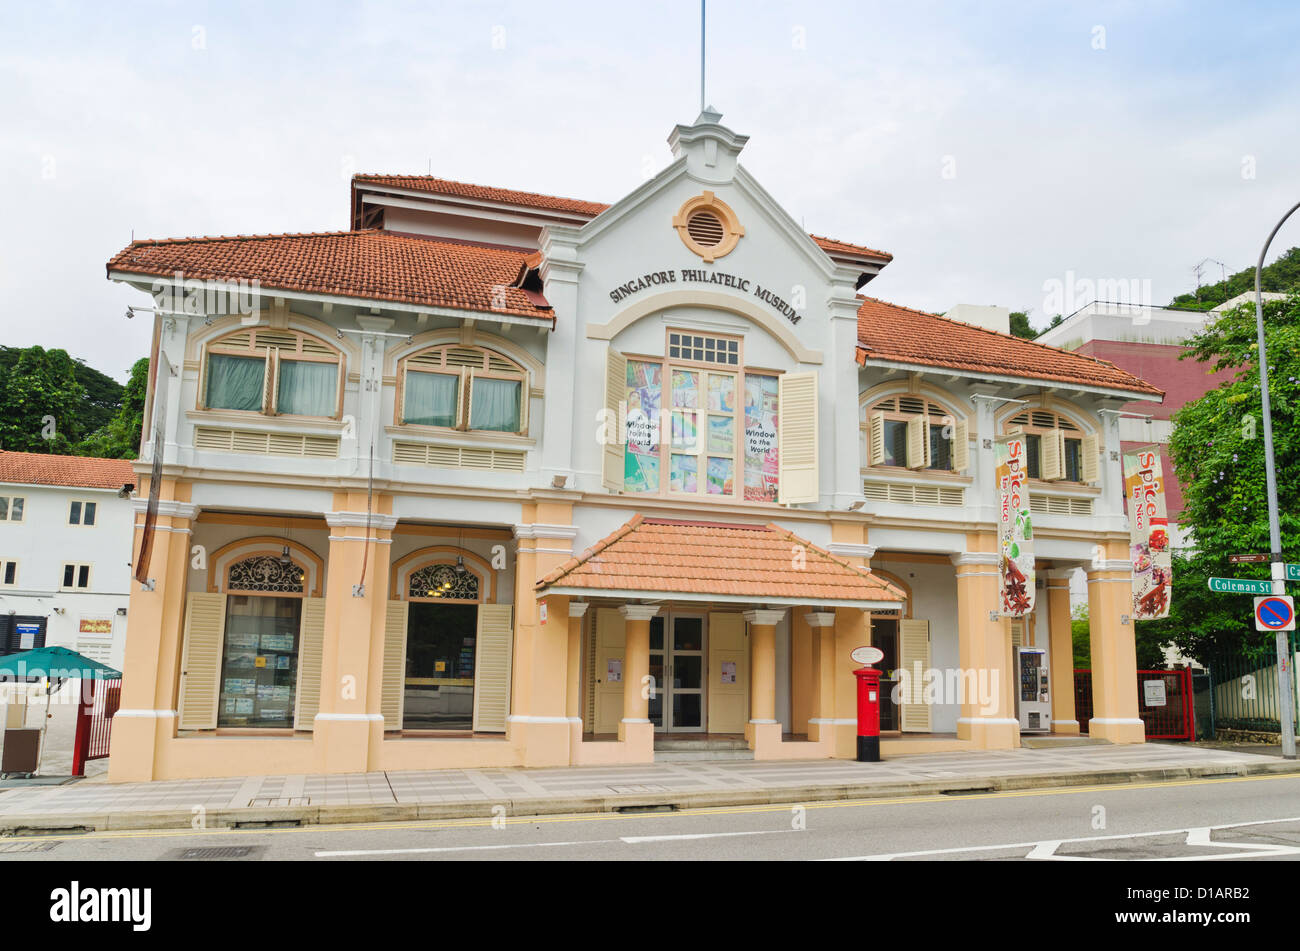 Singapore Philatelic Museum in Singapur Stockfoto